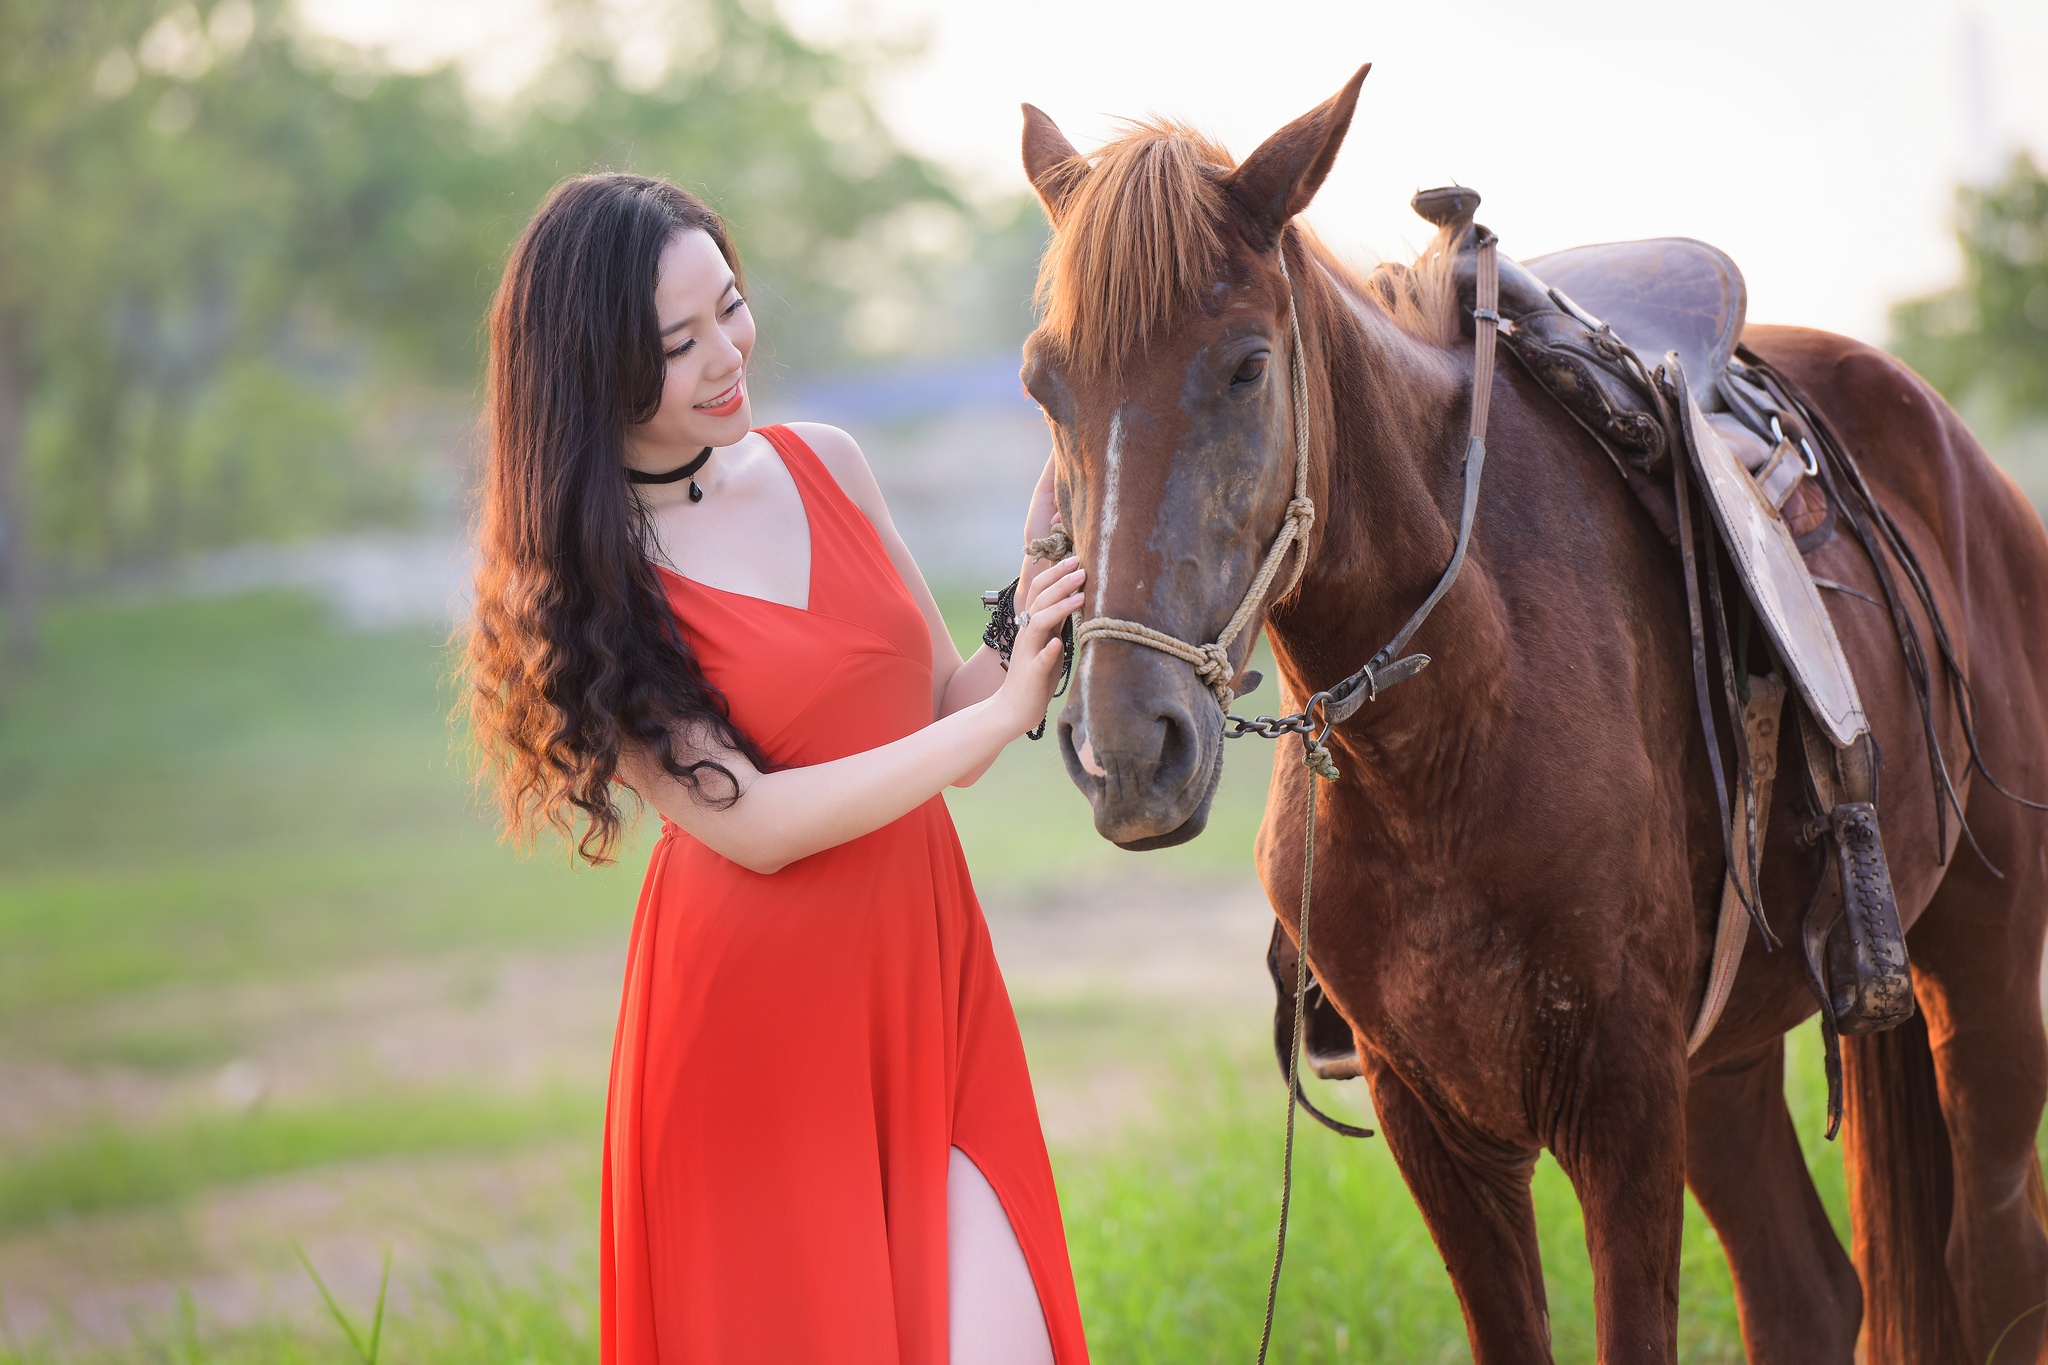 Девки и лошади. Девушка с лошадью. Фотосессия с лошадьми. Девушка на коне. Фотосессия с лошадью в платье.